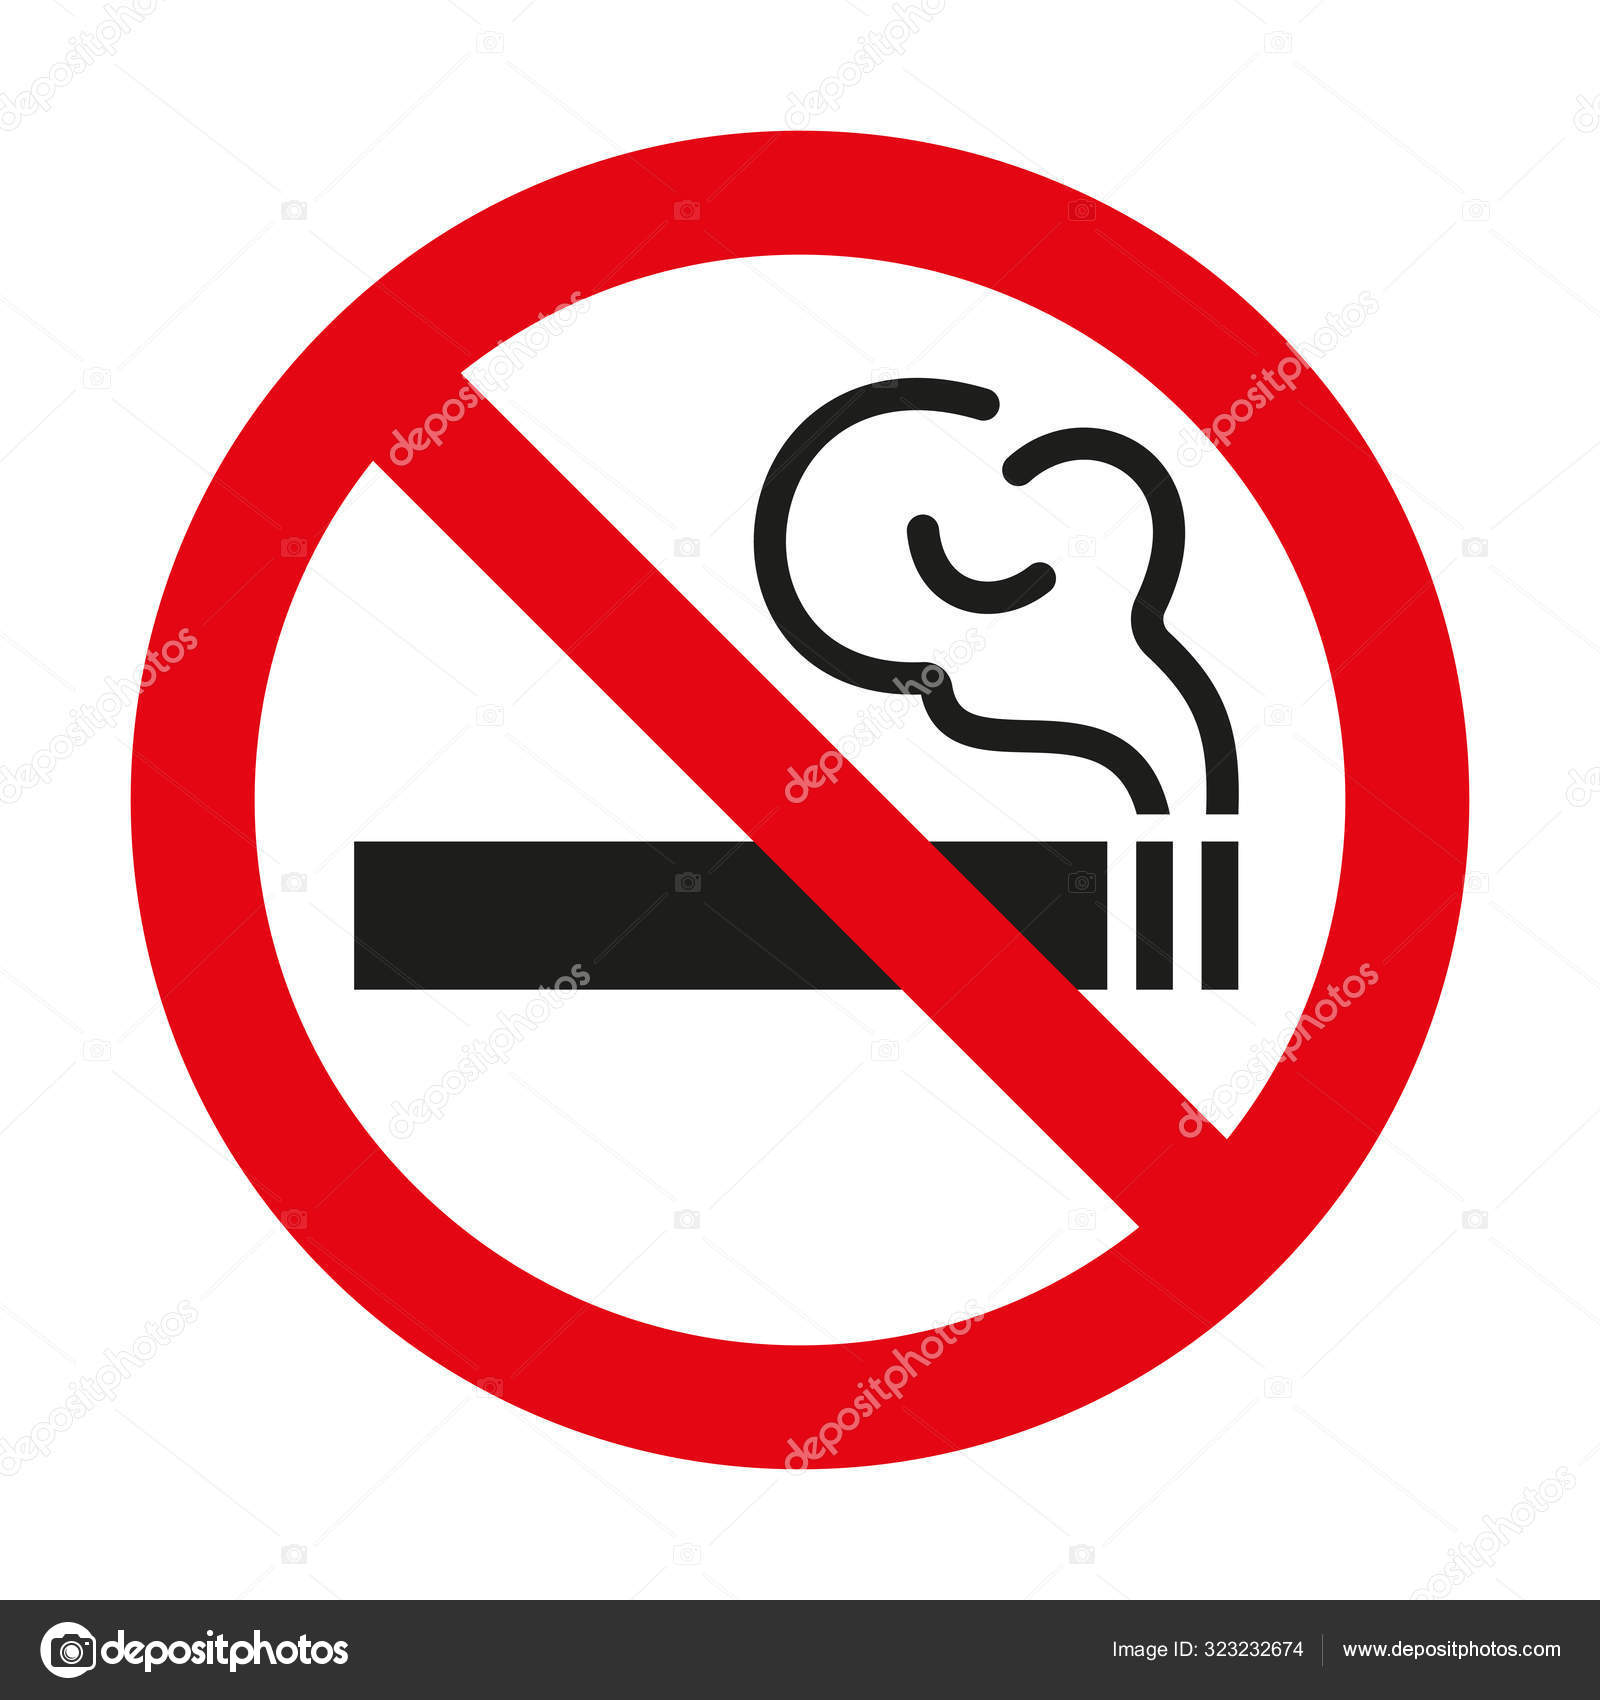 señal cartel prohibido fumar en español Stock Vector